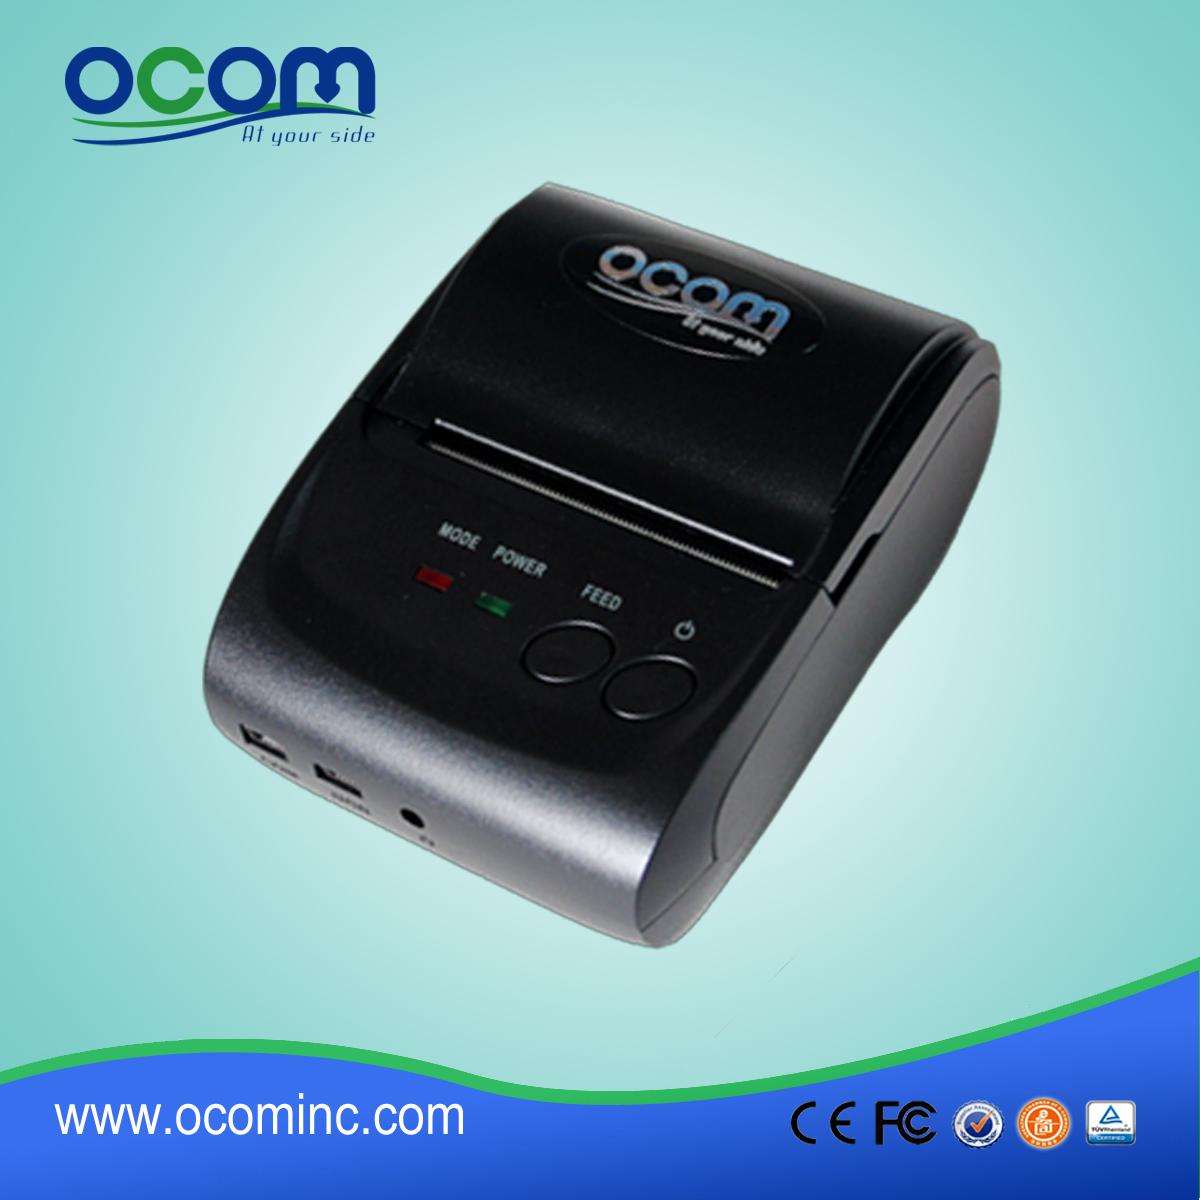 OCPP-M05: 2.015 caliente impresora bluetooth androide portátil, módulo de la impresora térmica